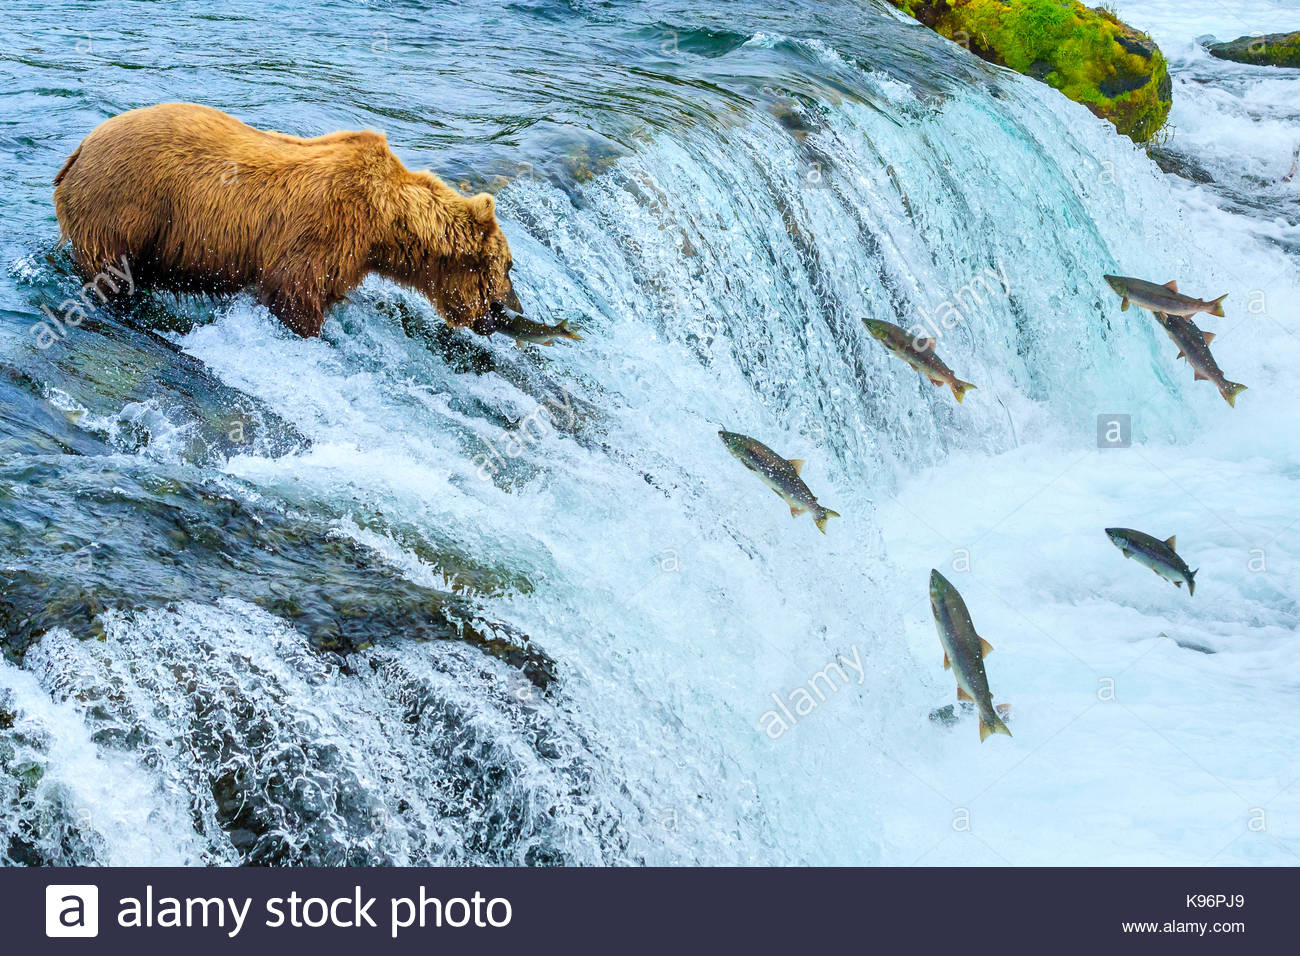 Brown bear, Ursus arctos, fishing for sockeye salmon at Brooks Falls. Stock Photo